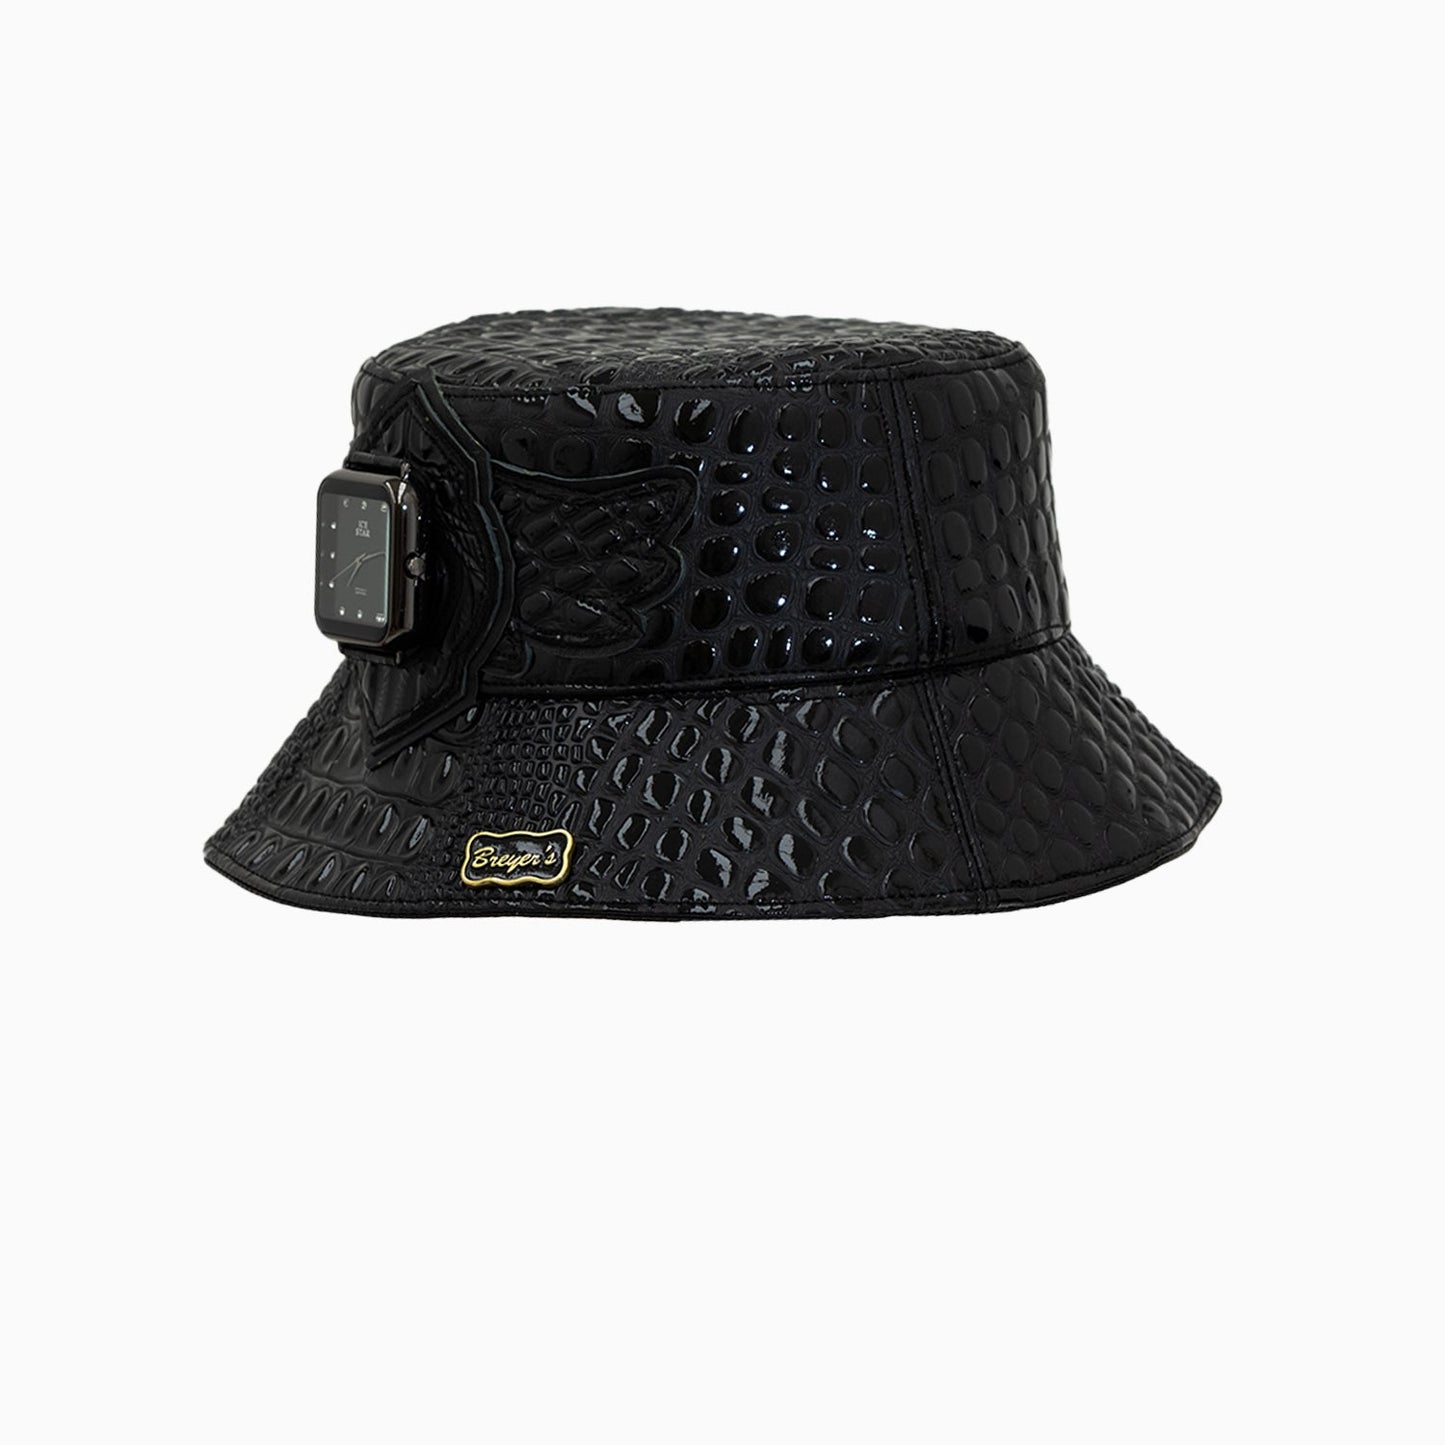 Breyer's Buck 50 Bucket Leather Watch Hat